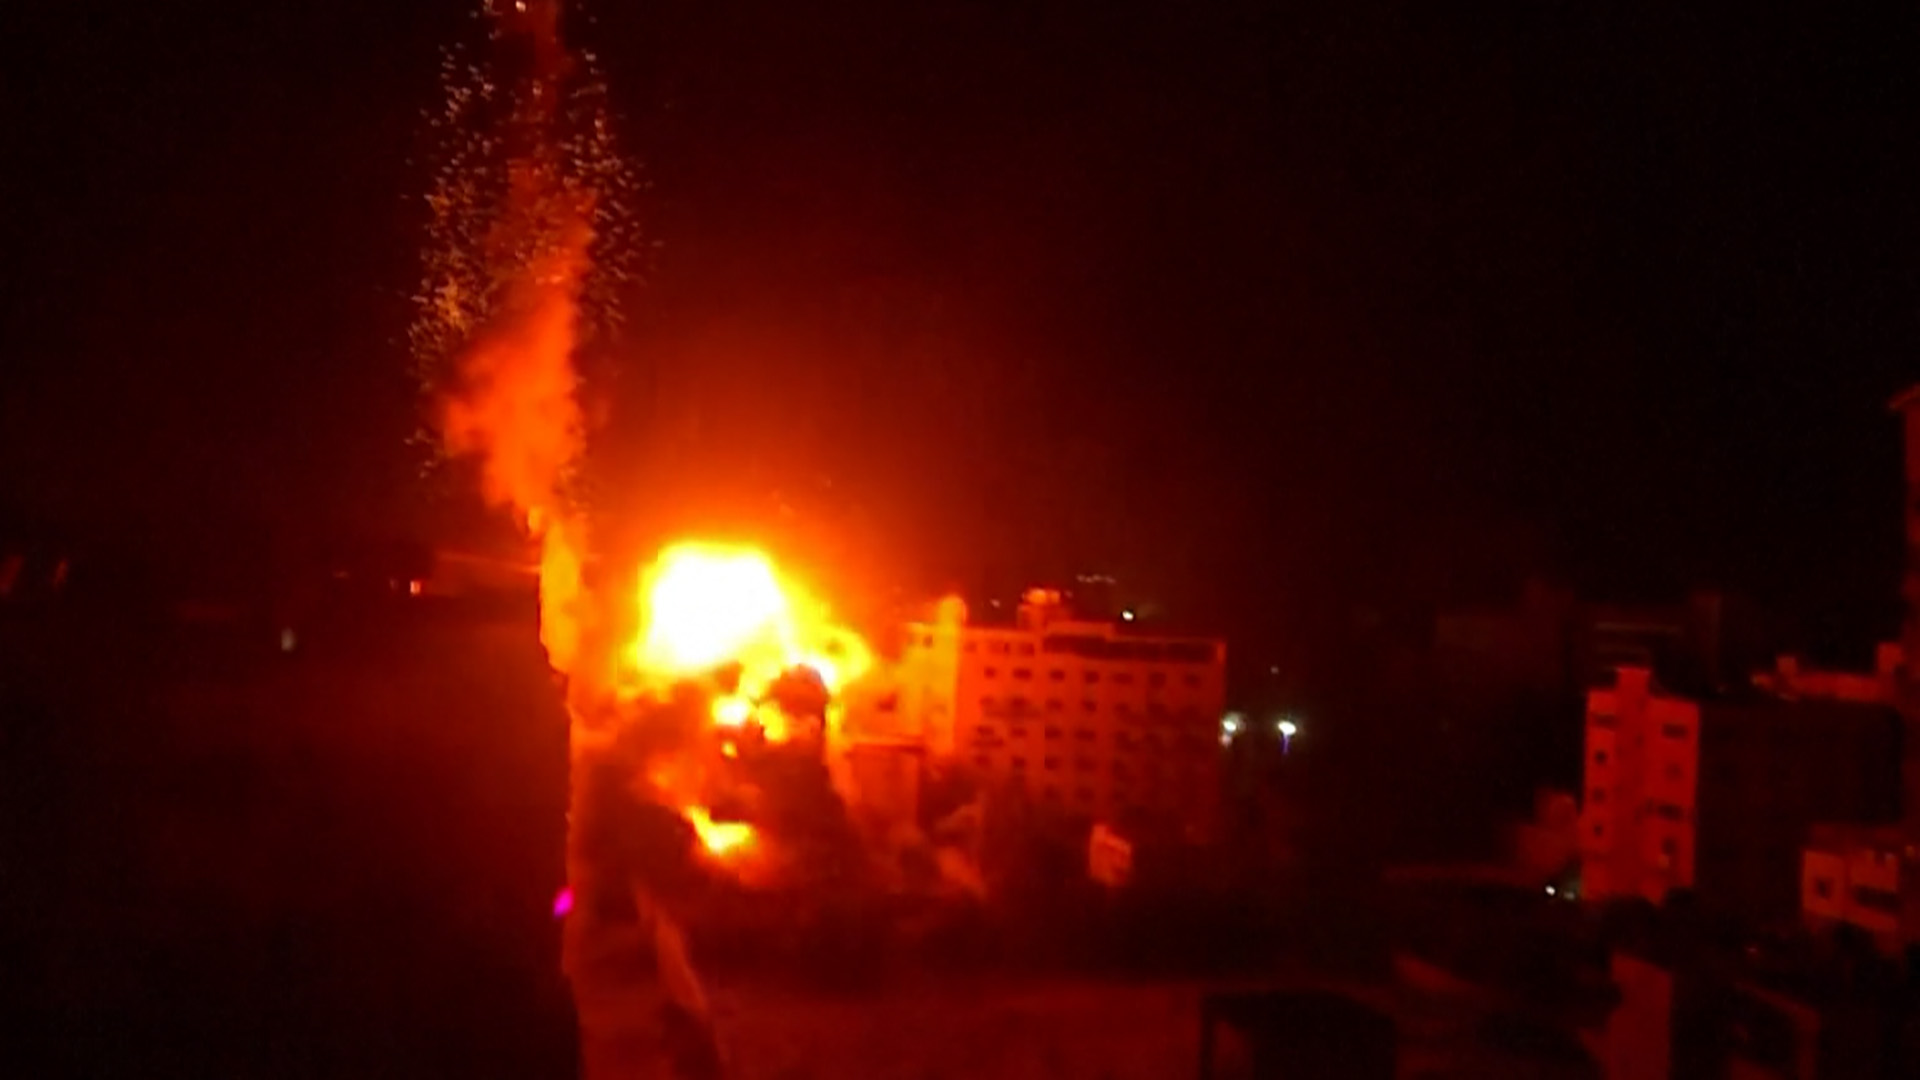 Dashcam video shows Hamas gunmen toss grenade into bomb shelter